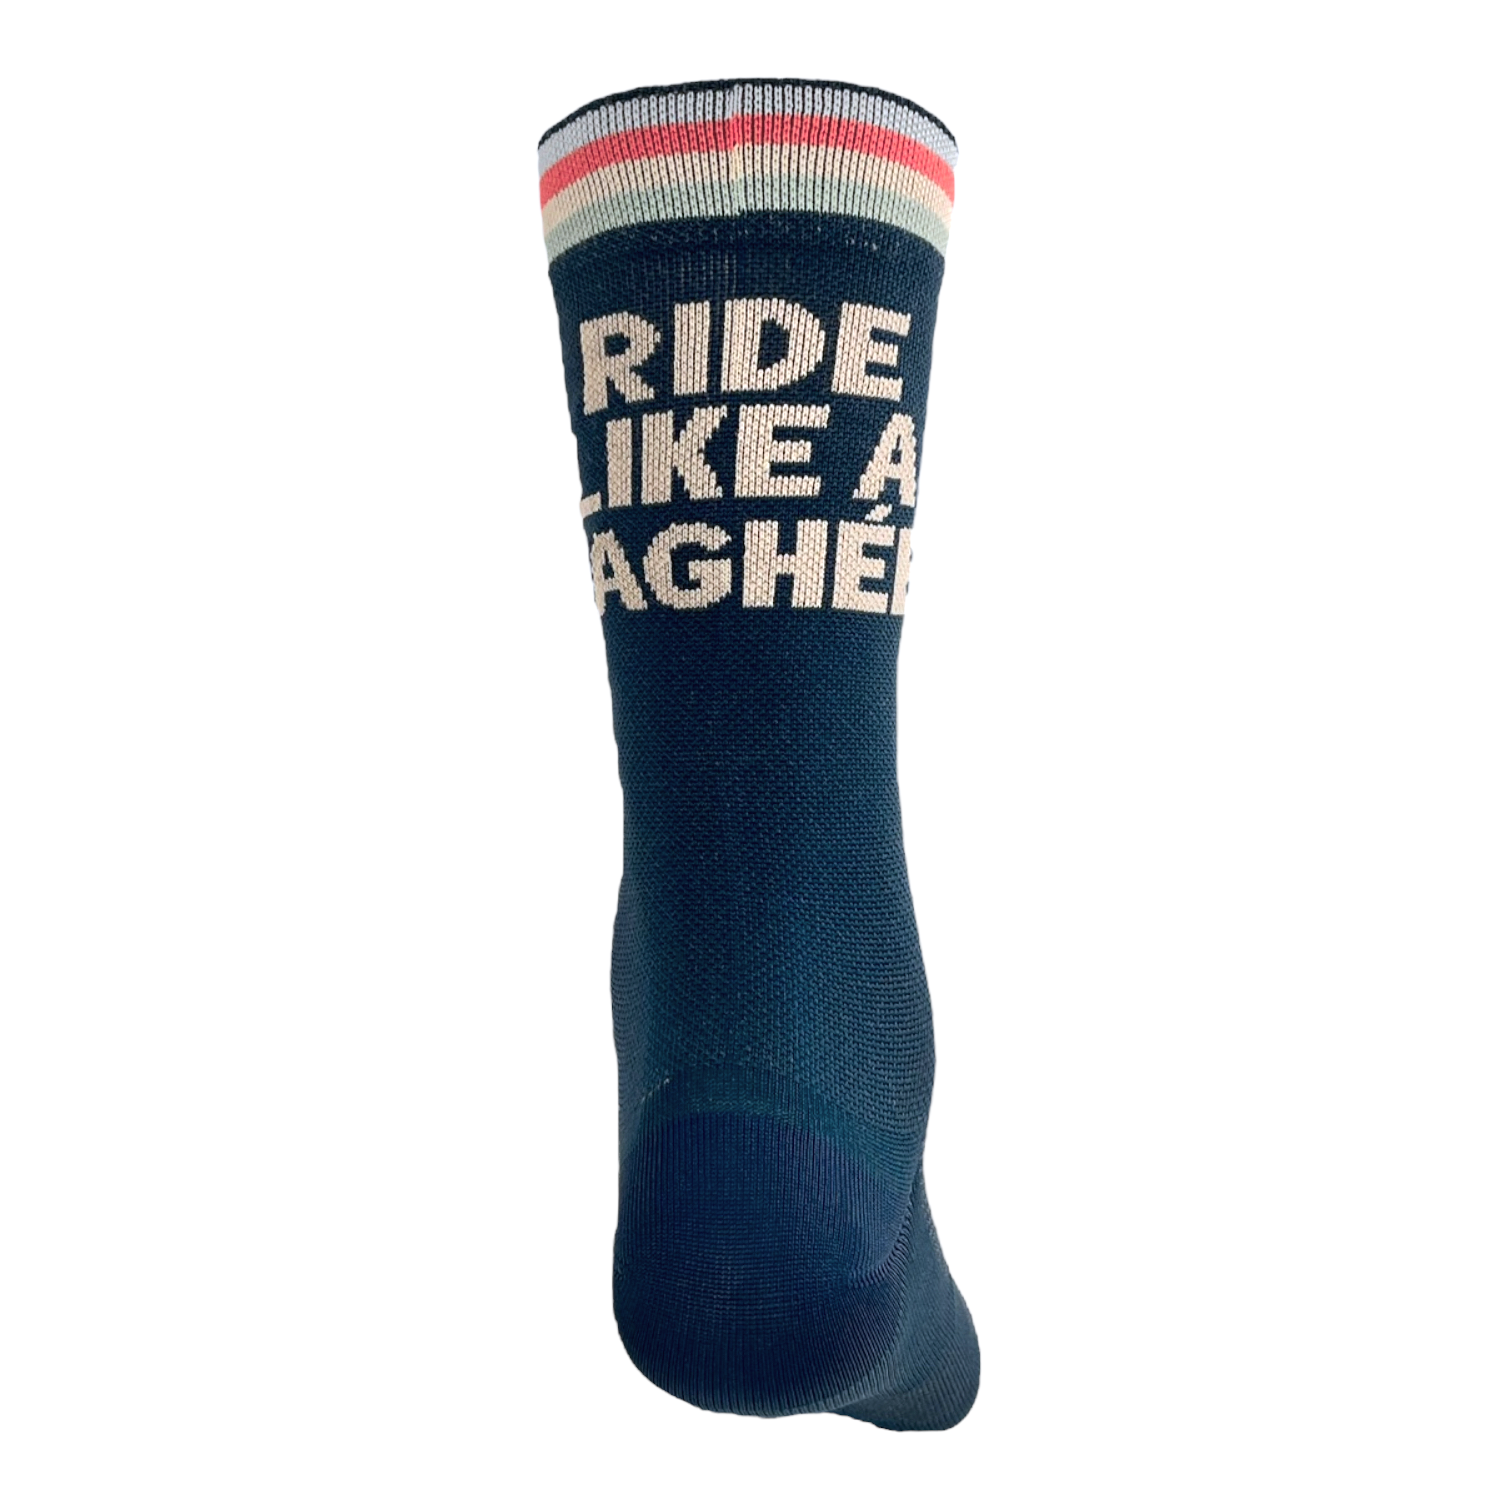 Petrol blue "Ride like a laghée" ciclistica socks